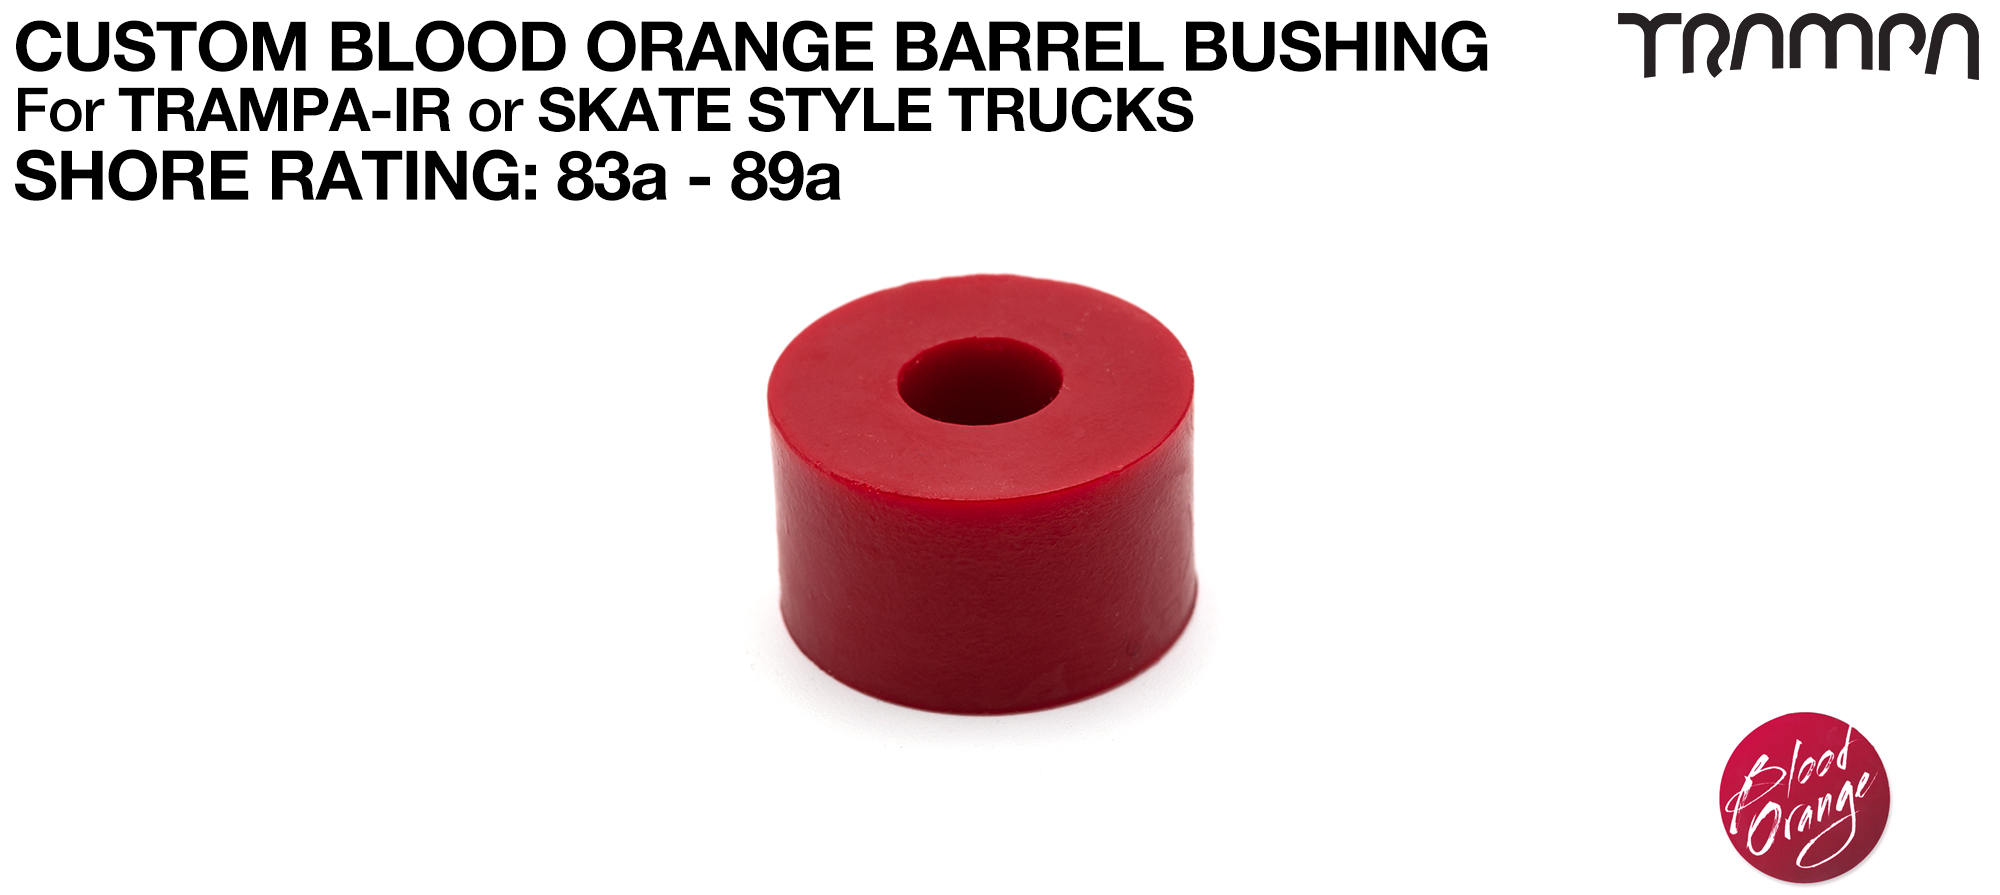 Custom Blood Orange Bushings - High Performance Urethane Bushings with lots of Flex options for customisation